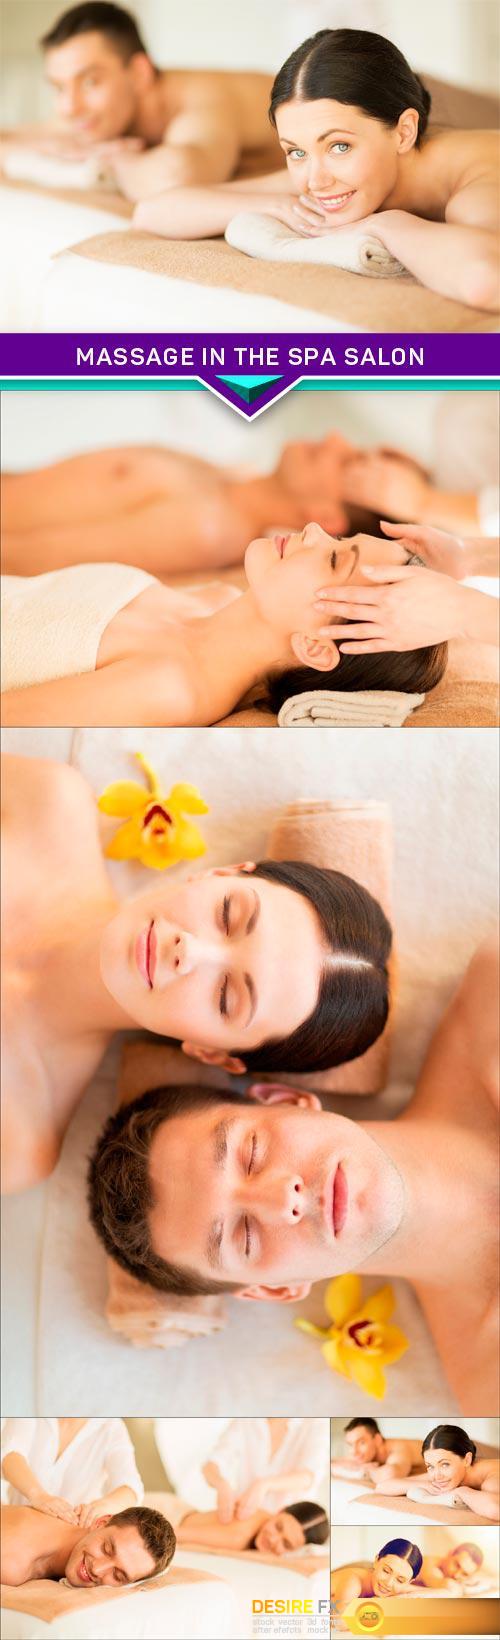 Massage in the spa salon 5x JPEG